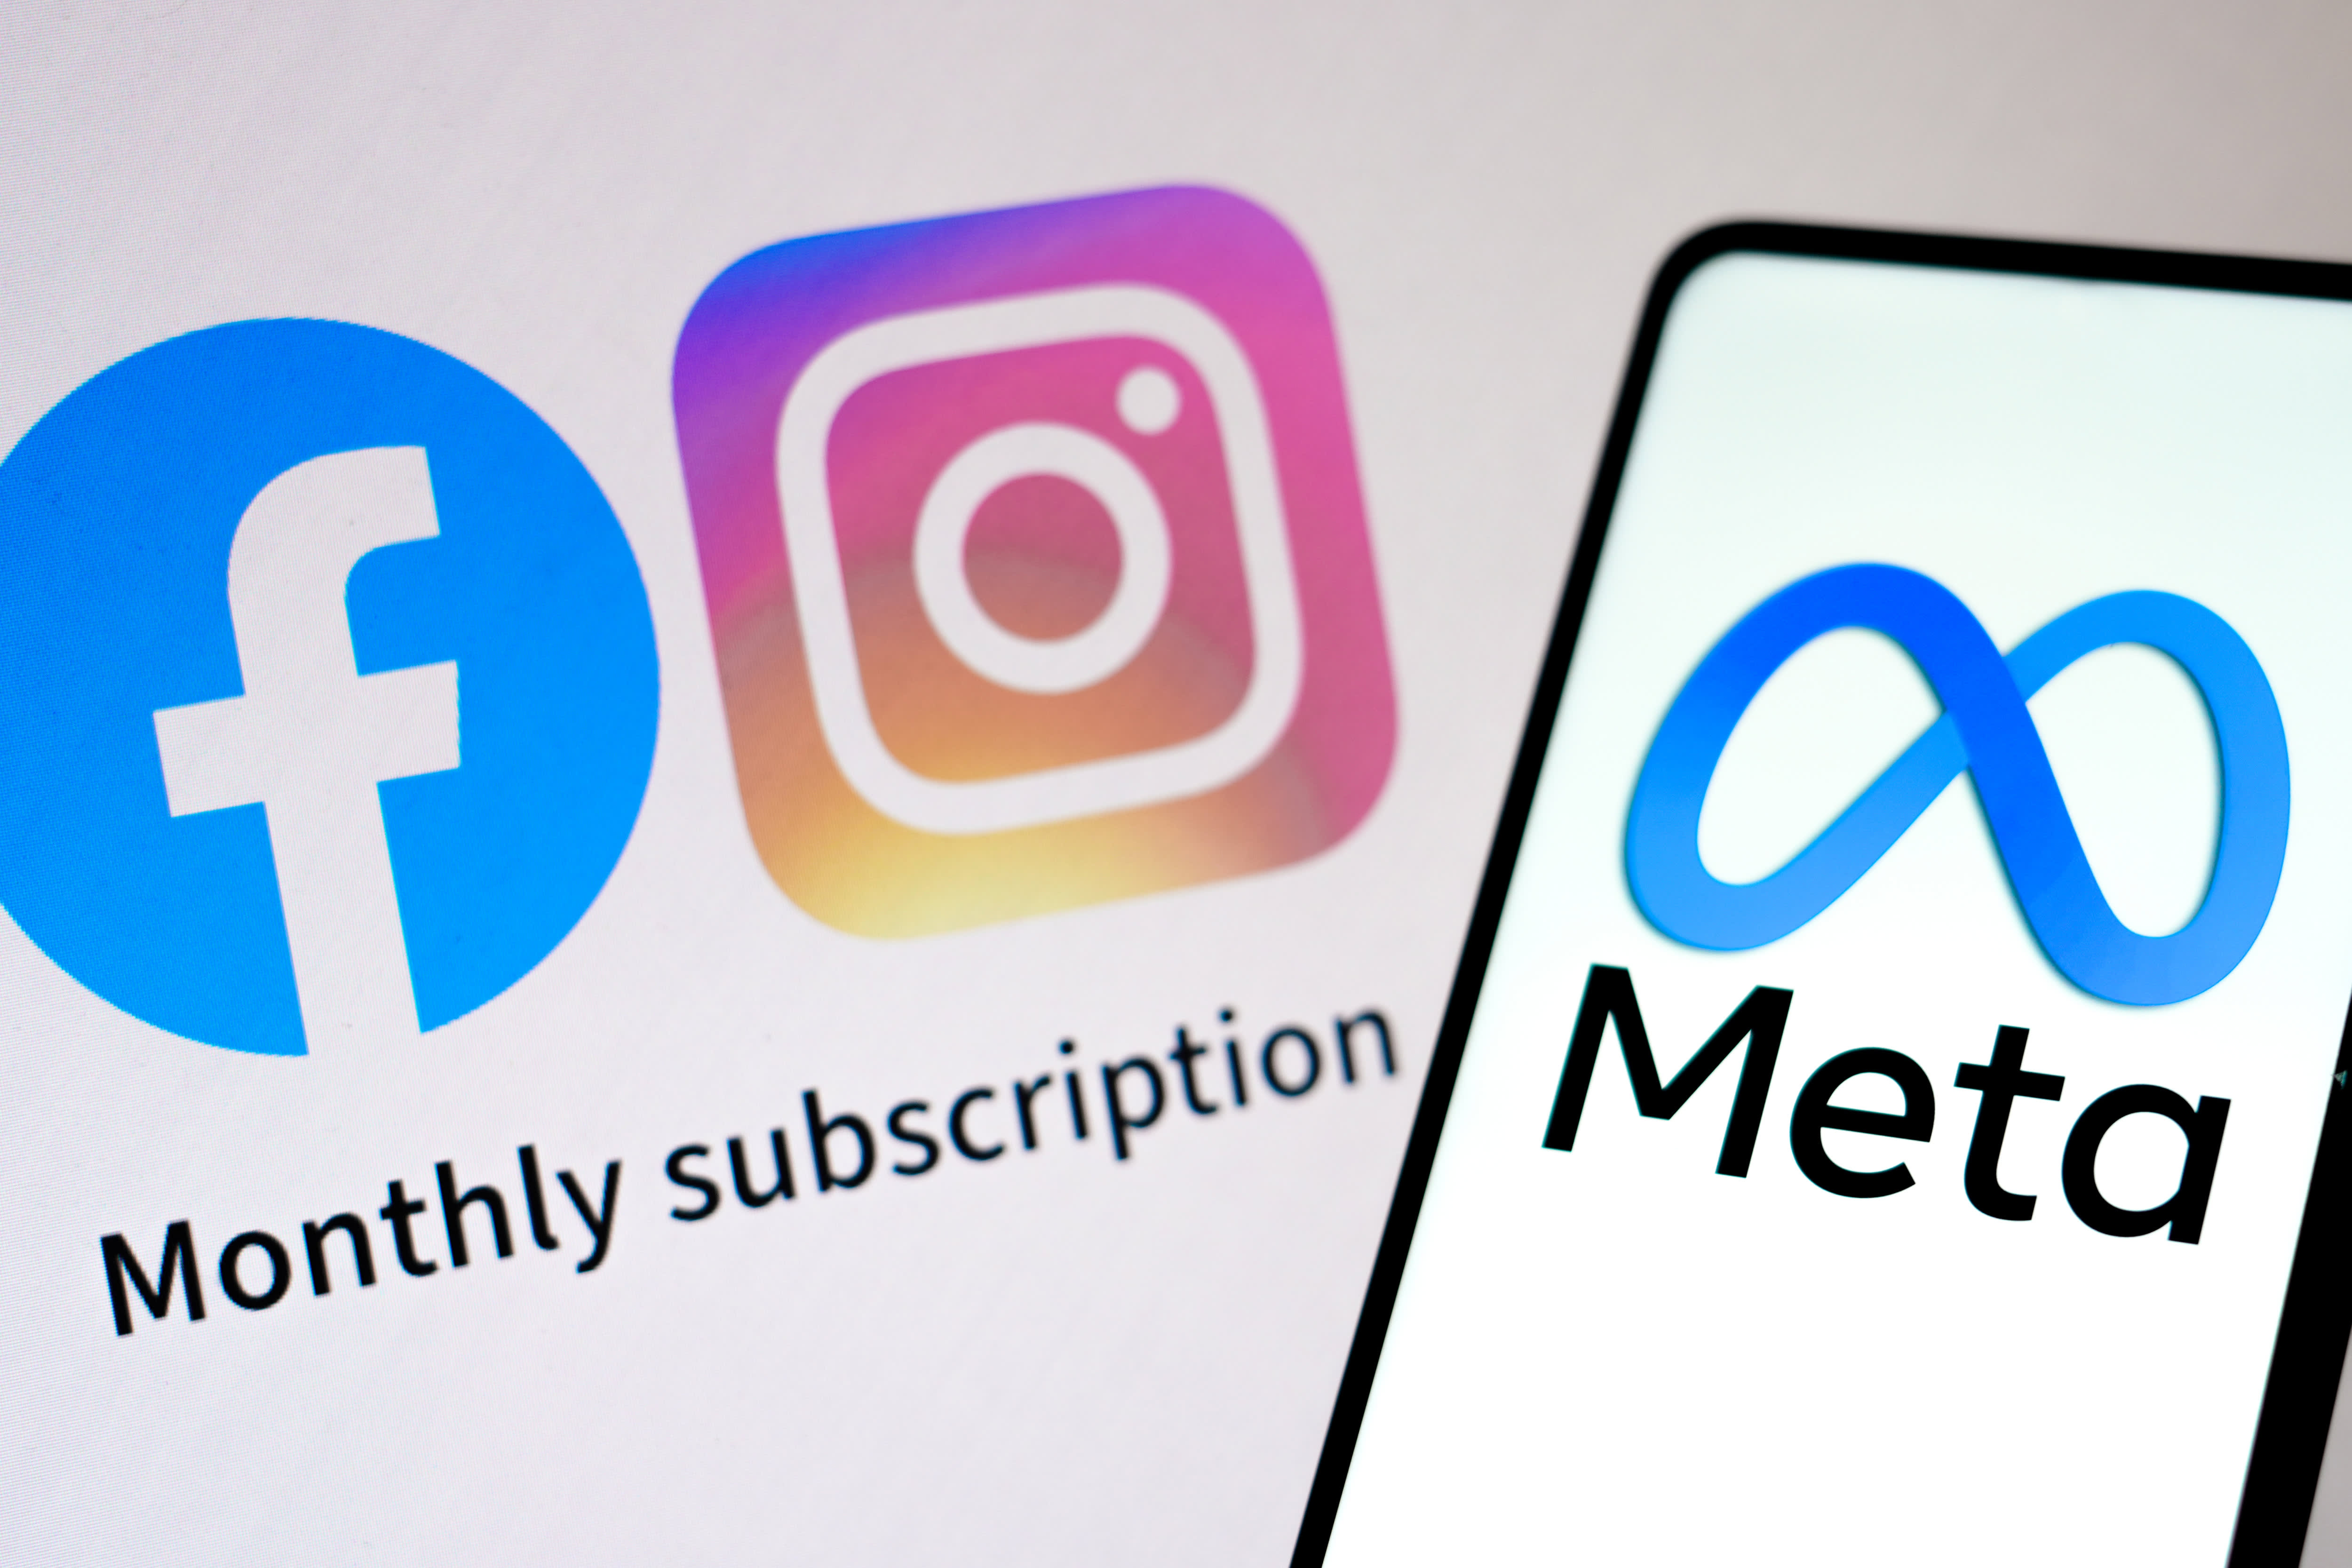 Meta Verified Instagram Account, Limited stock